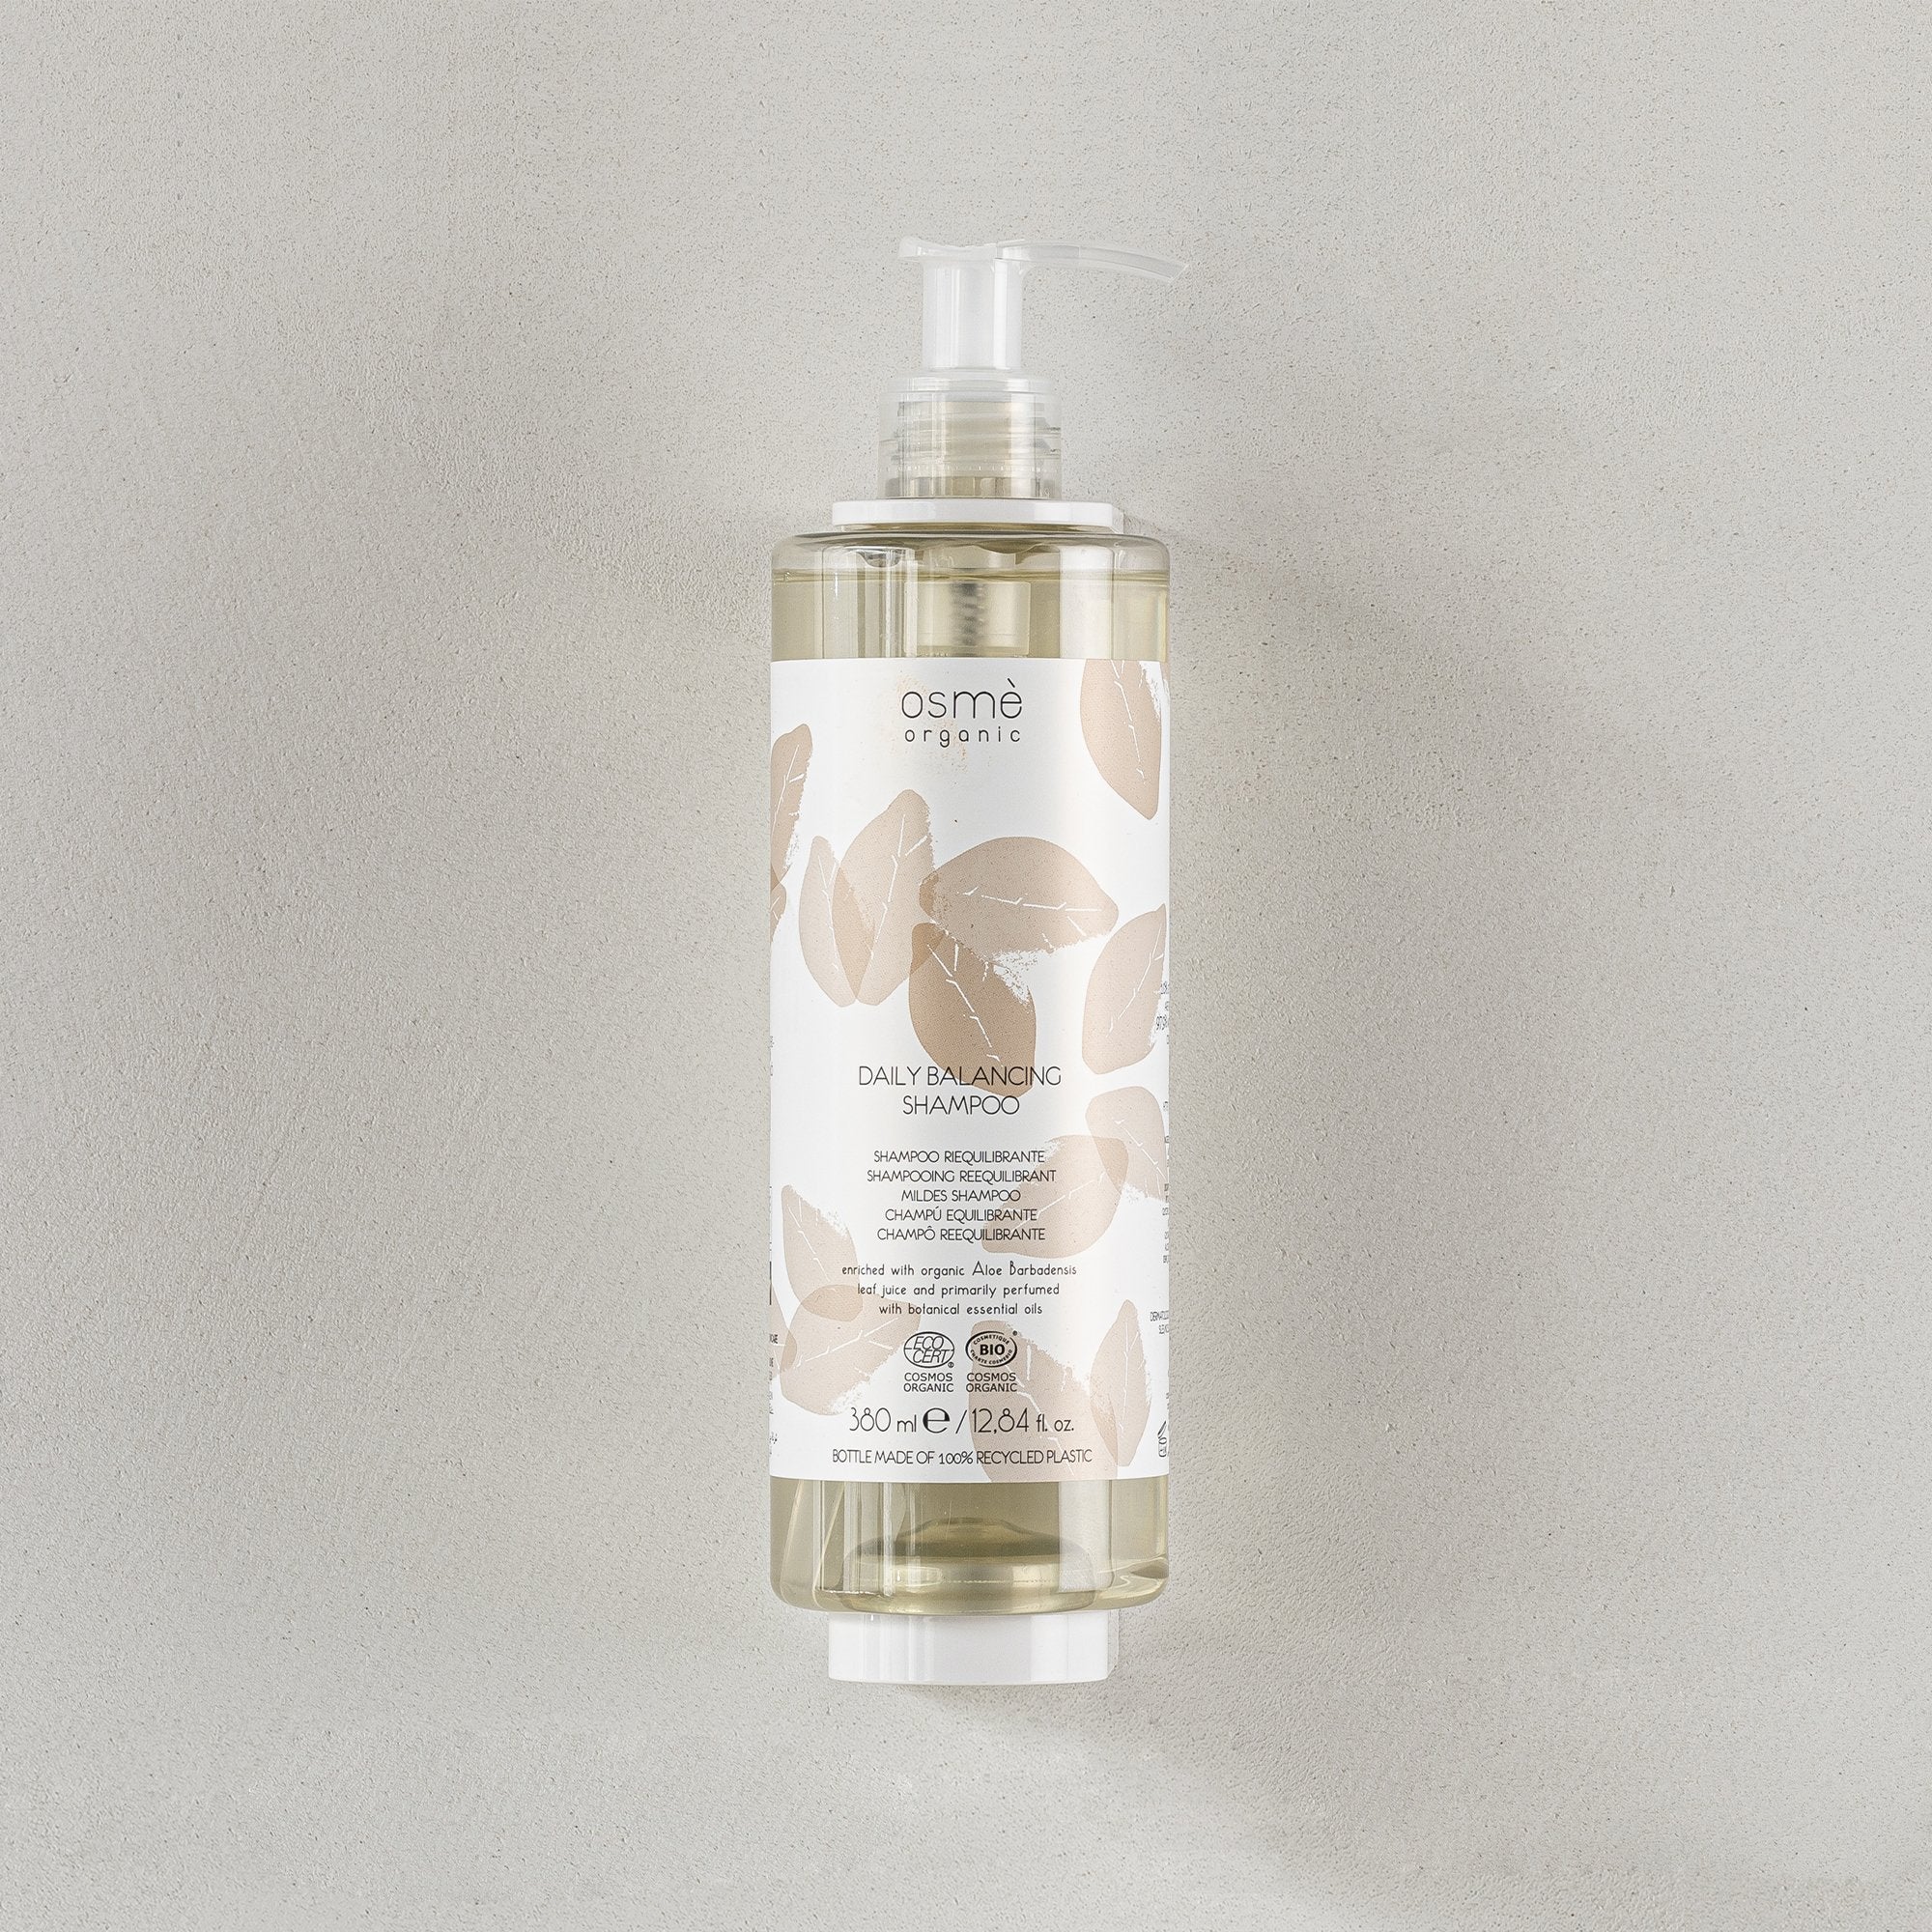 Osmè Organic Certified Balancing Shampoo With Locked Pump (380 ml)